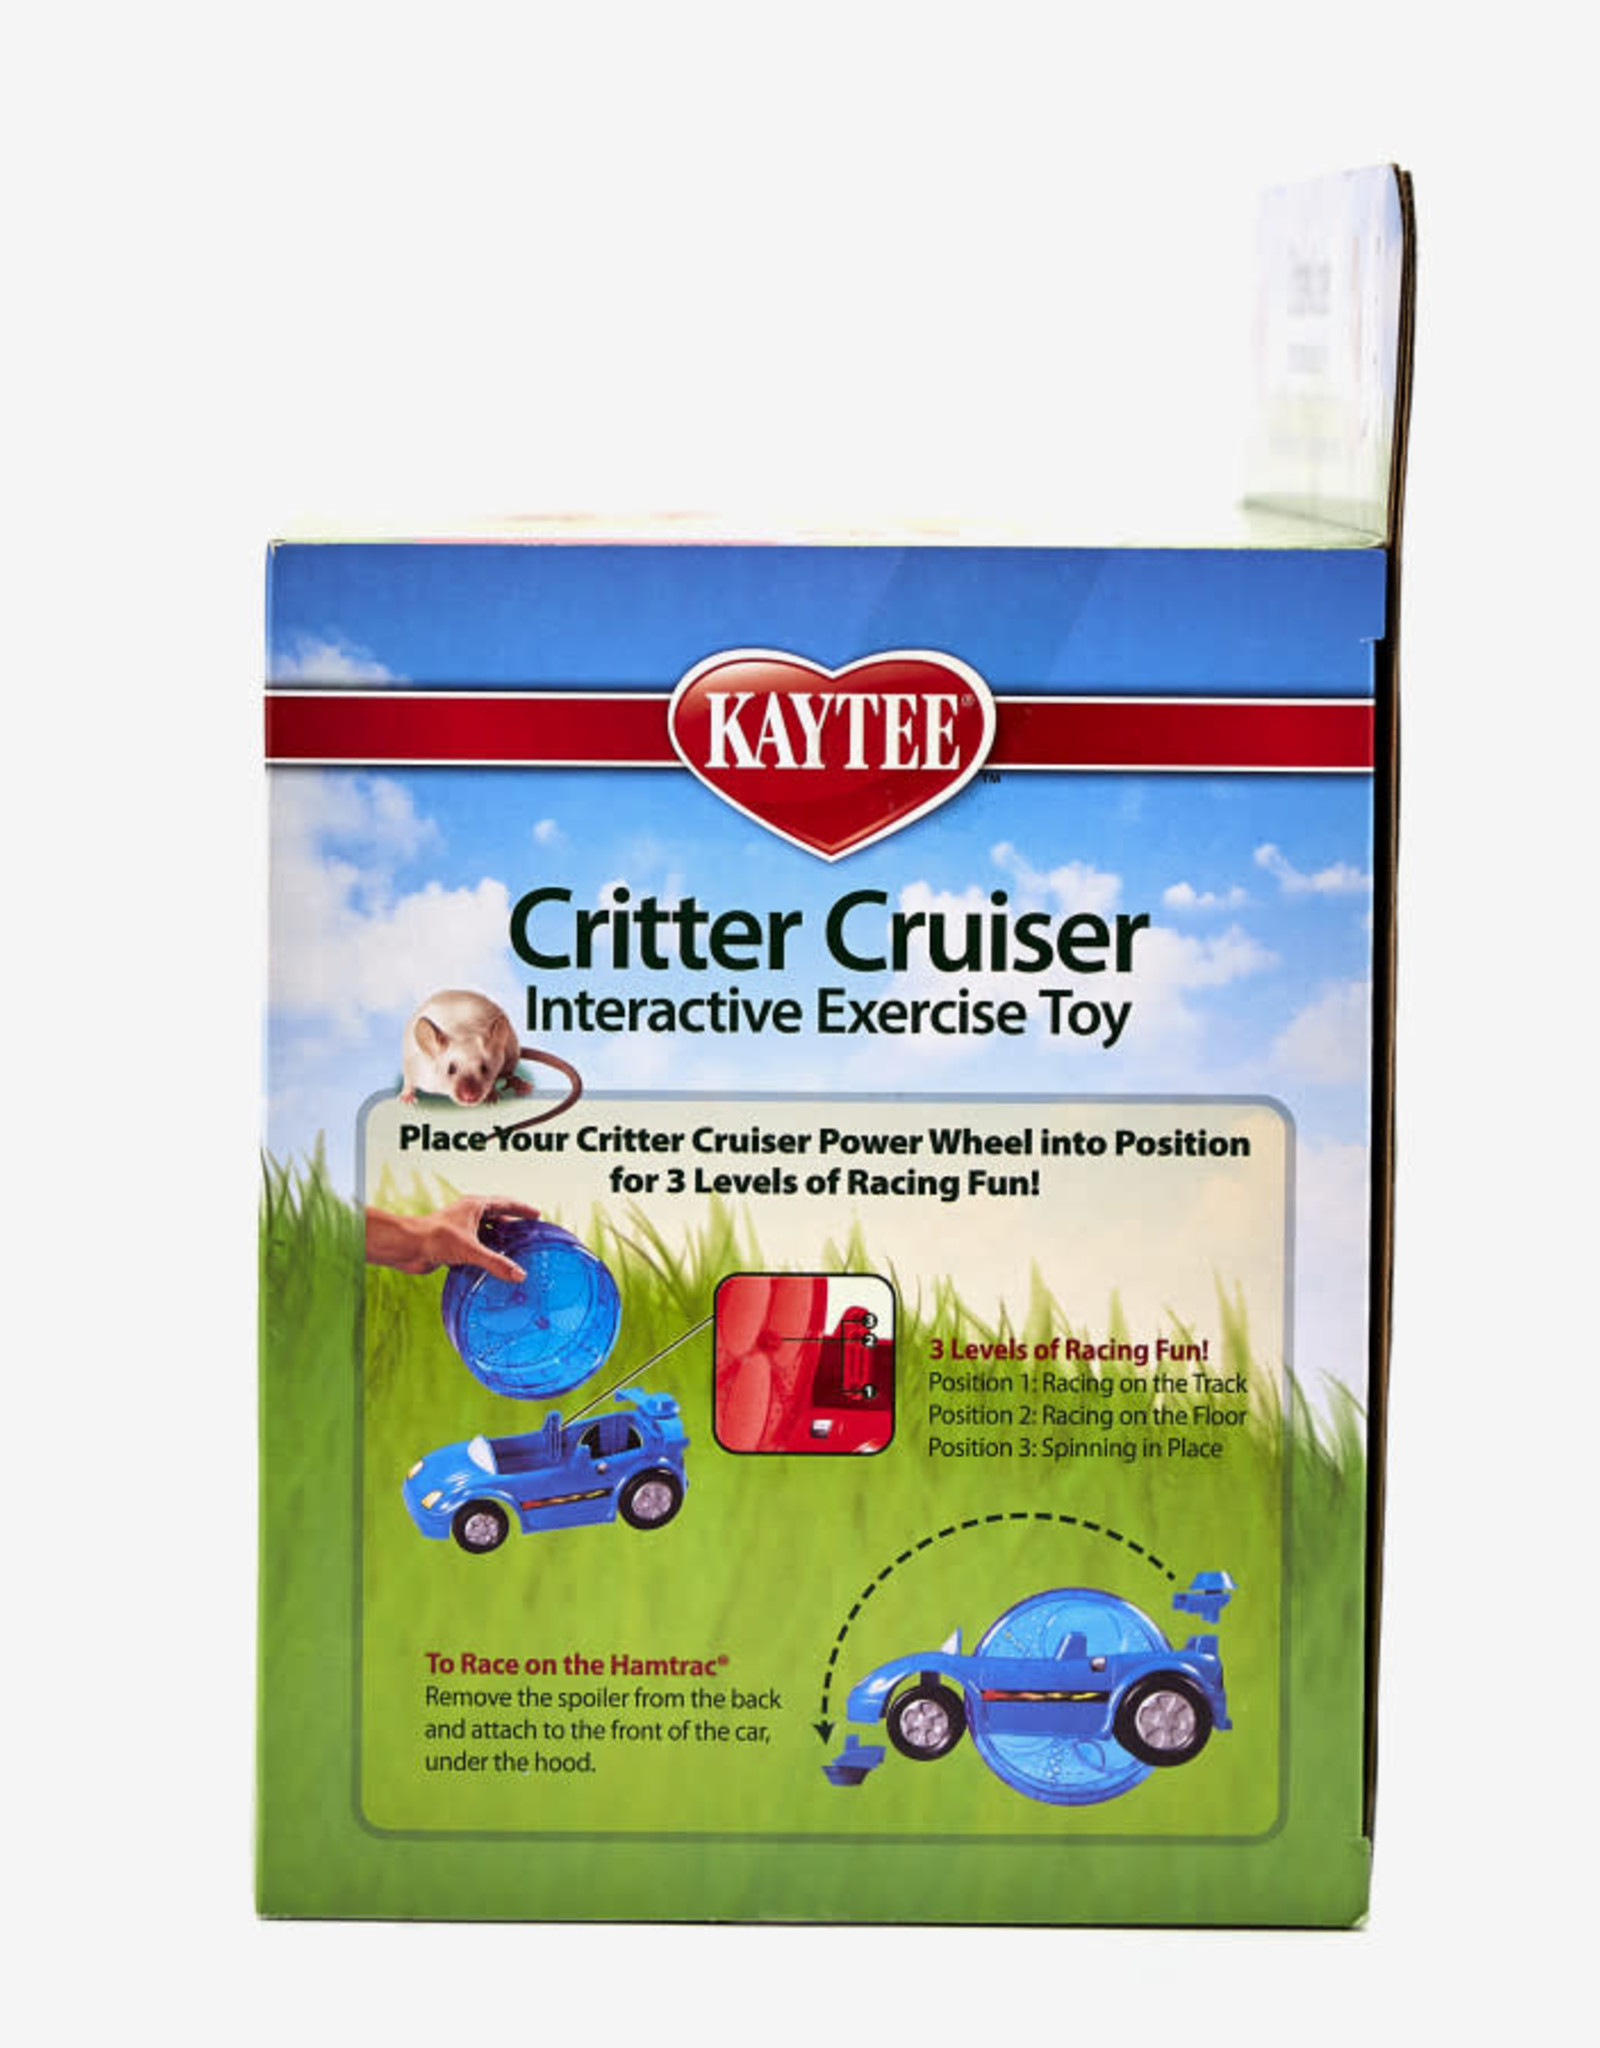 CENTRAL - KAYTEE PRODUCTS KAYTEE- CRITTER- CRUISER 12X9X6- STATIONARY/MOBILE/OR ON KAYTEE'S HAMTRAC